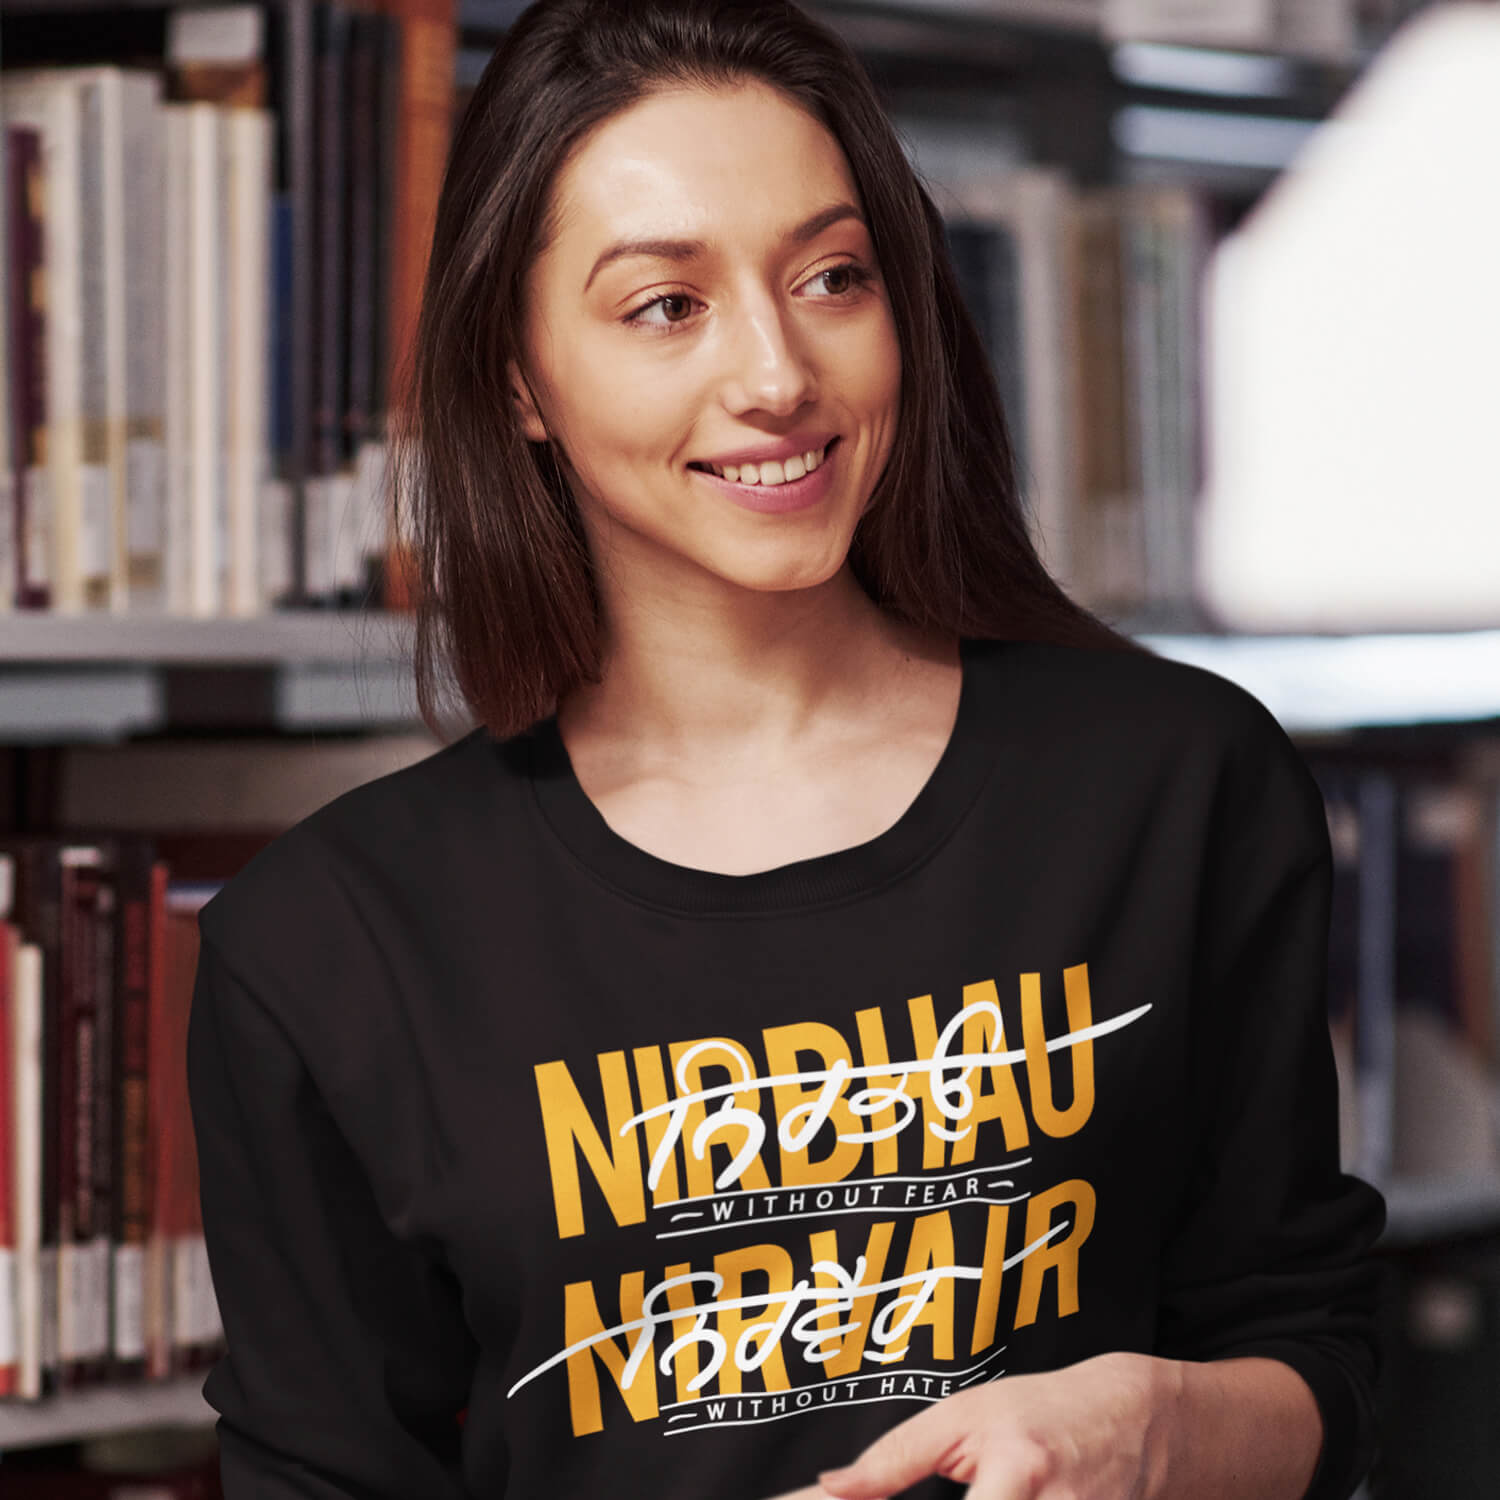 Nirbhau Nirvair - Black Punjabi Sweatshirt